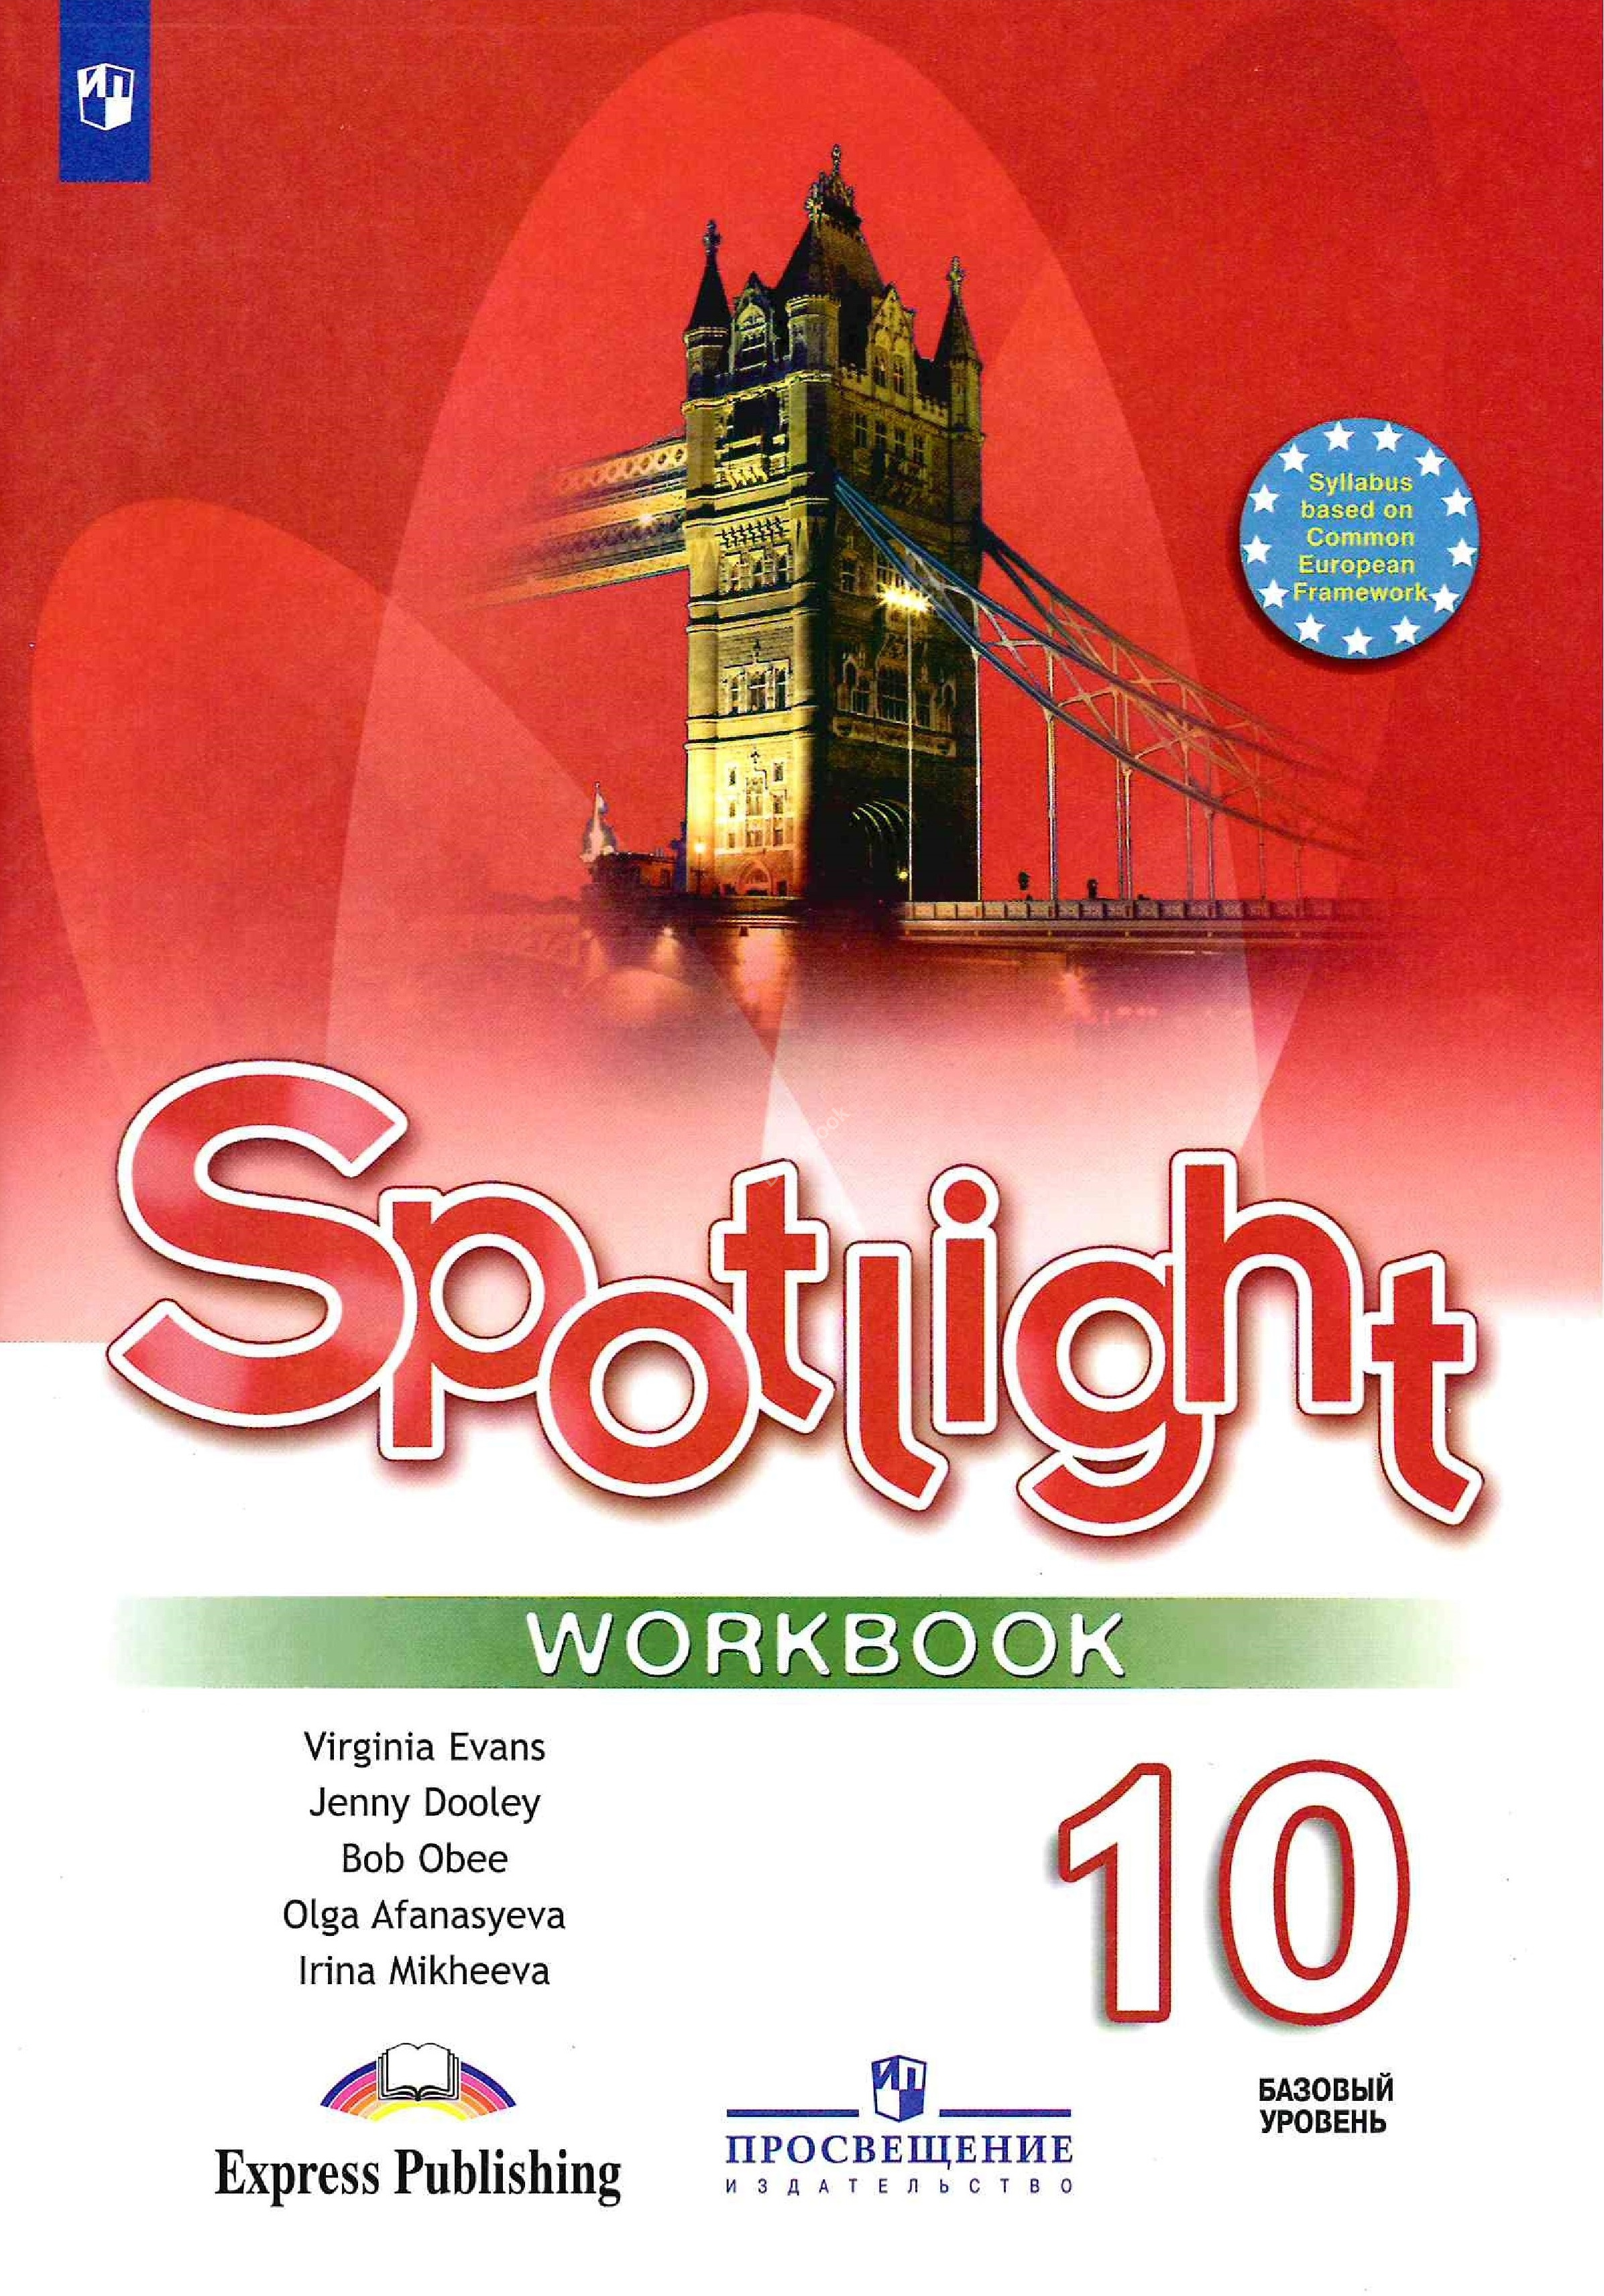 Спотлайт 5 2023. Workbook Spotlight 5 класс ваулина. Spotlight 5 Workbook английский язык Эванс. Англ 5 класс рабочая тетрадь Spotlight. Тетради для английского языка 5 класс спотлайт.